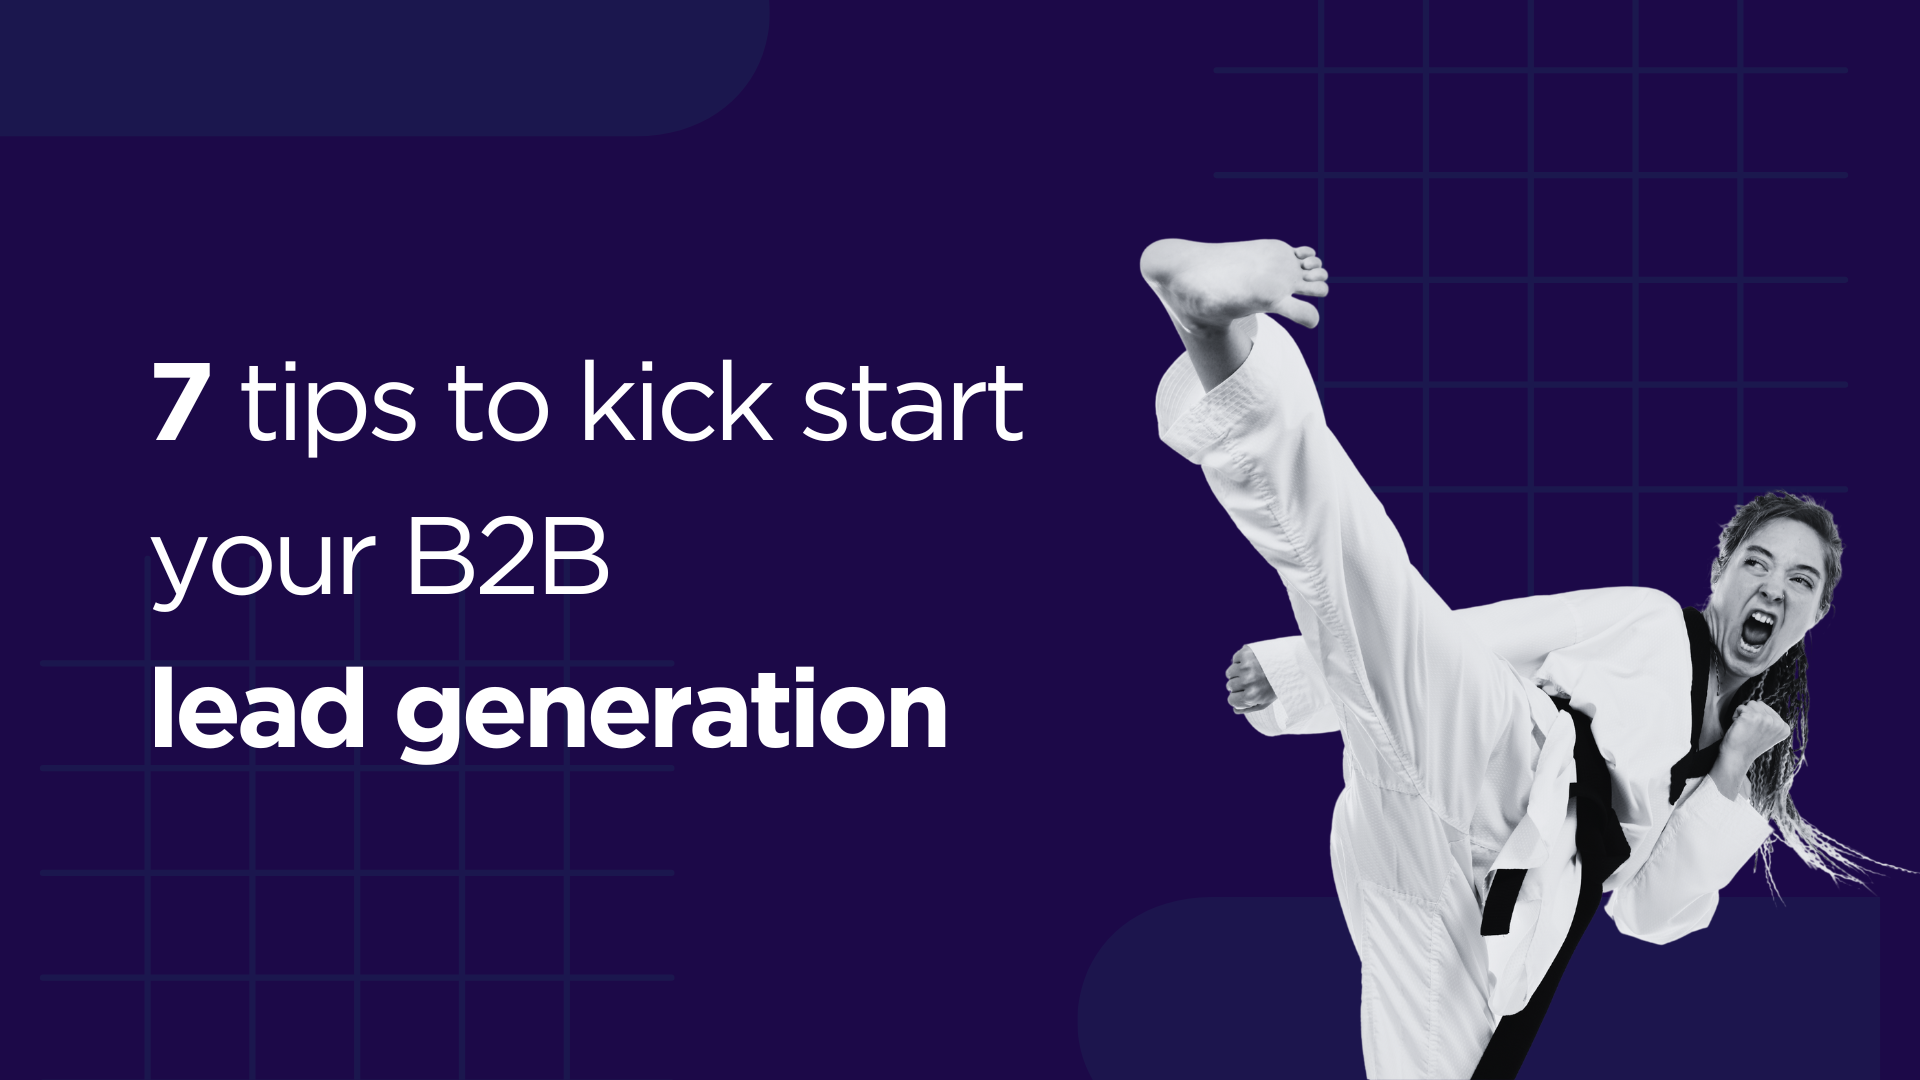 7 tips to kick start your B2B lead generation